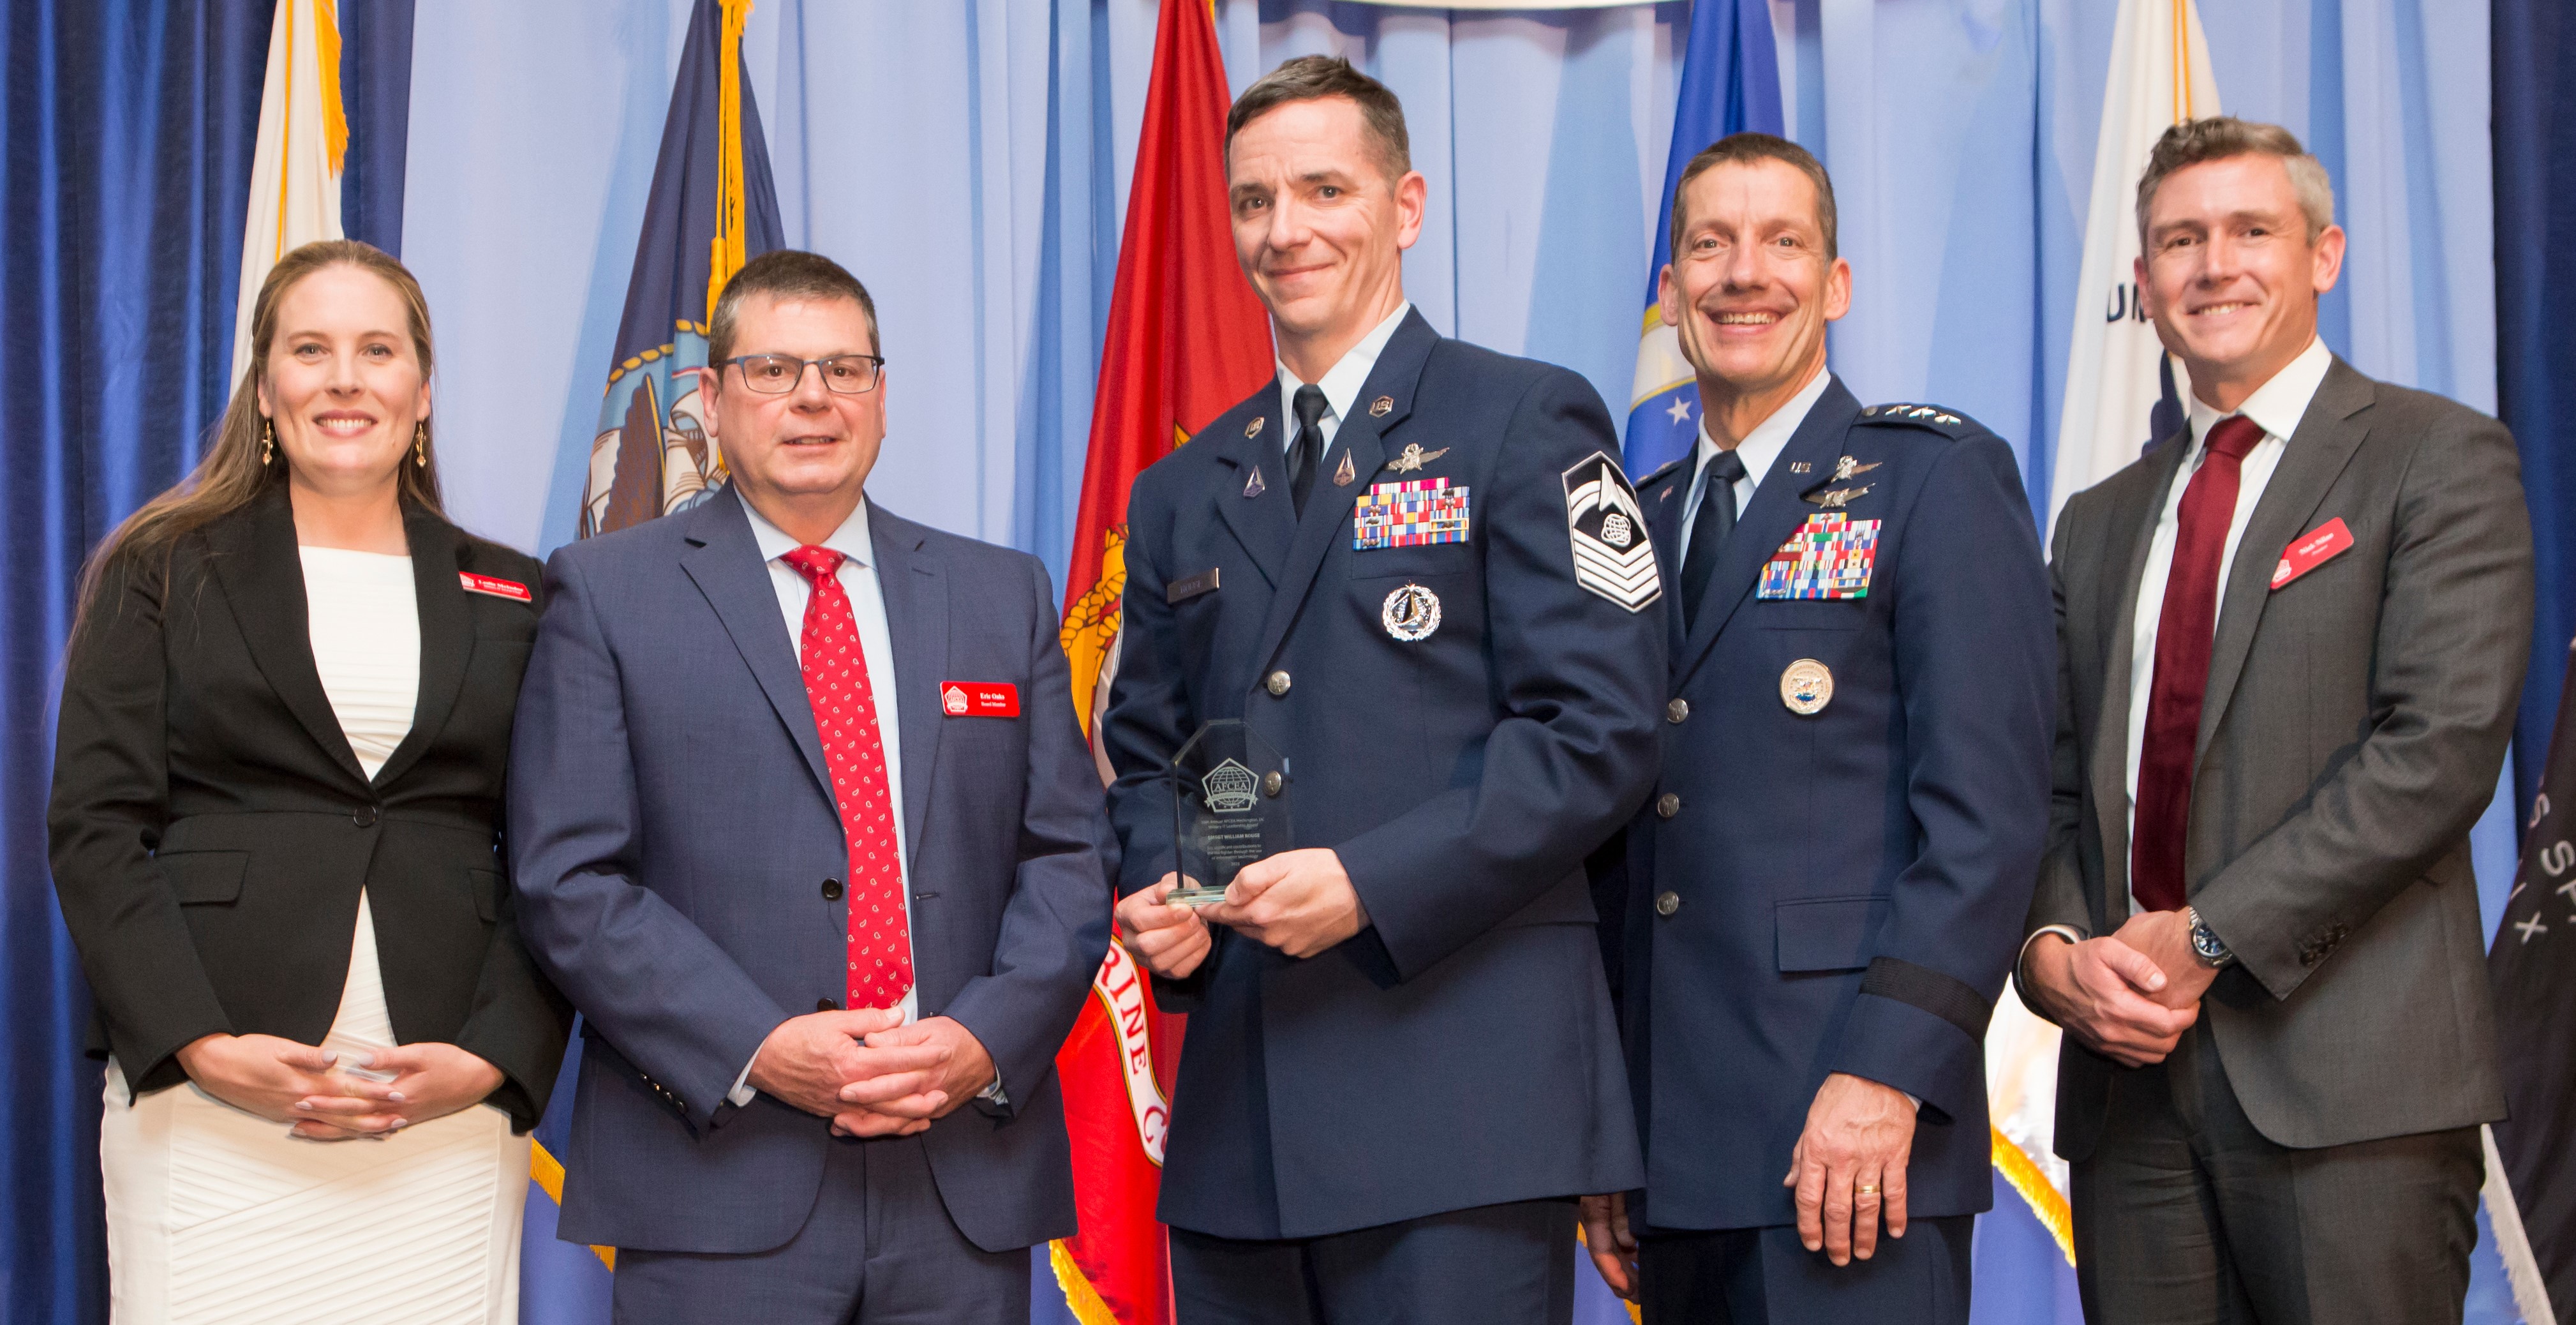 Air Force Master Sgt. Craig R. Maxson, Jr., poses after receiving award